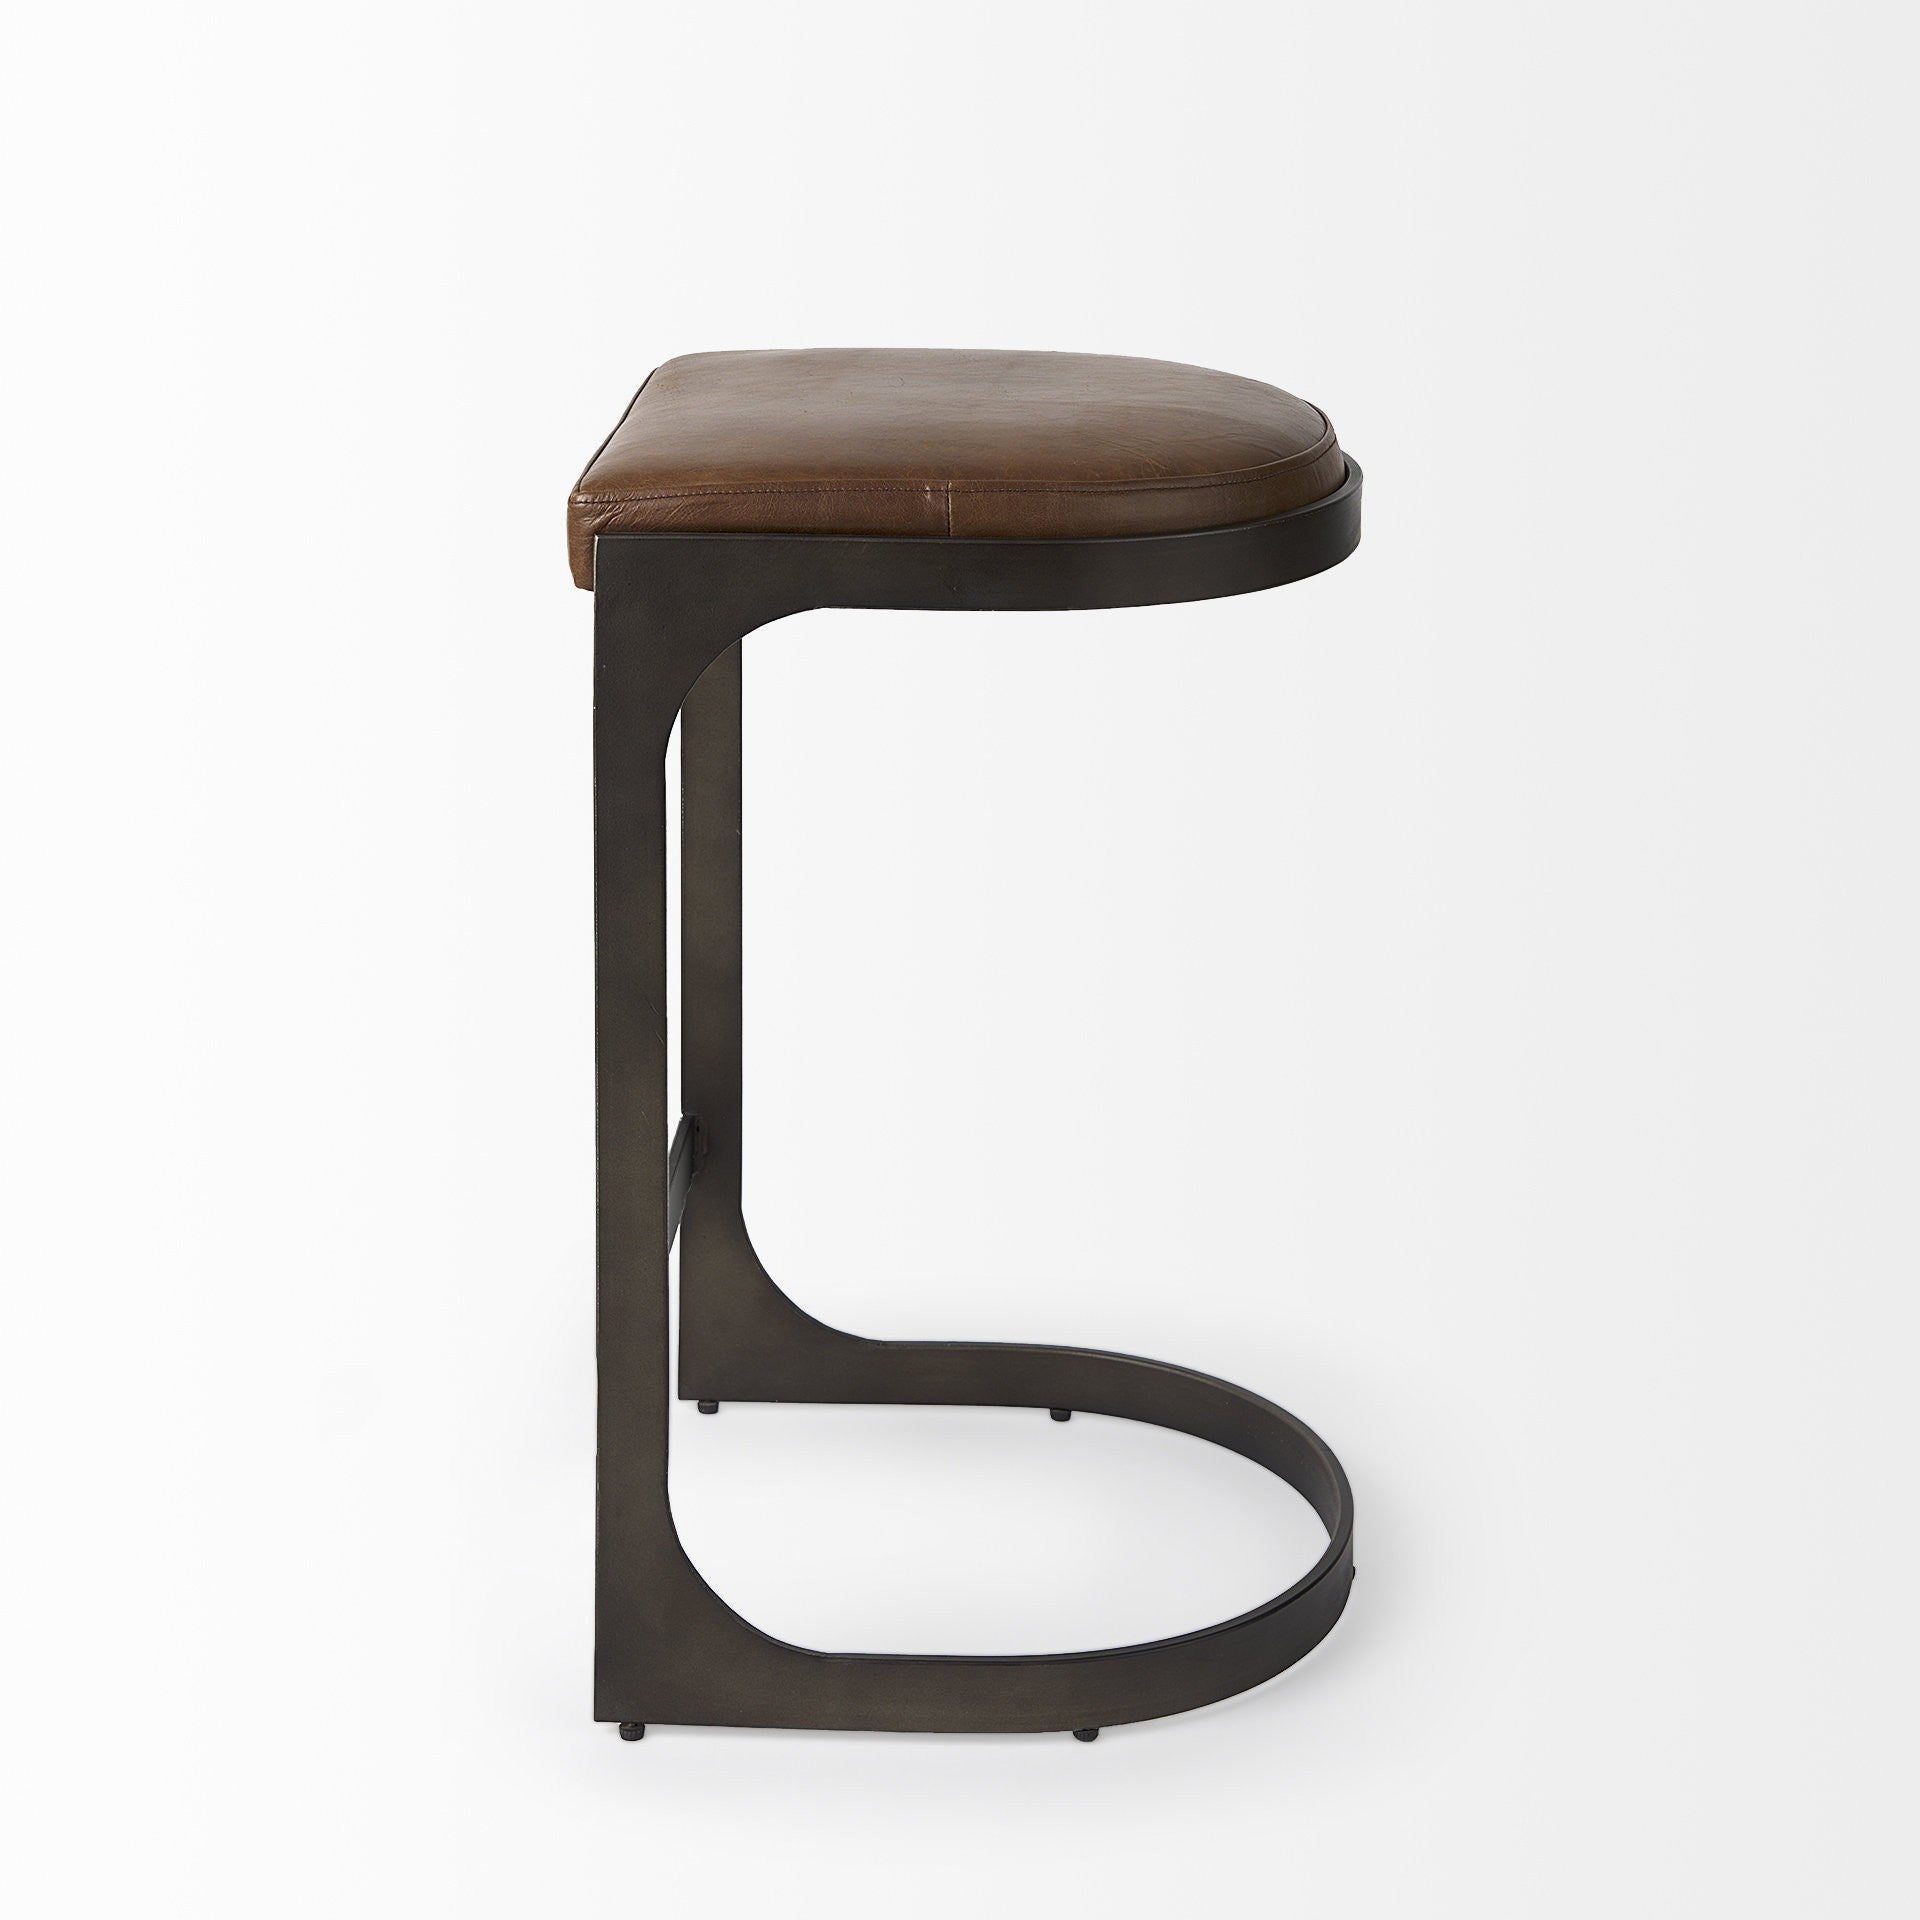 29" Medium Brown Iron Backless Bar Chair